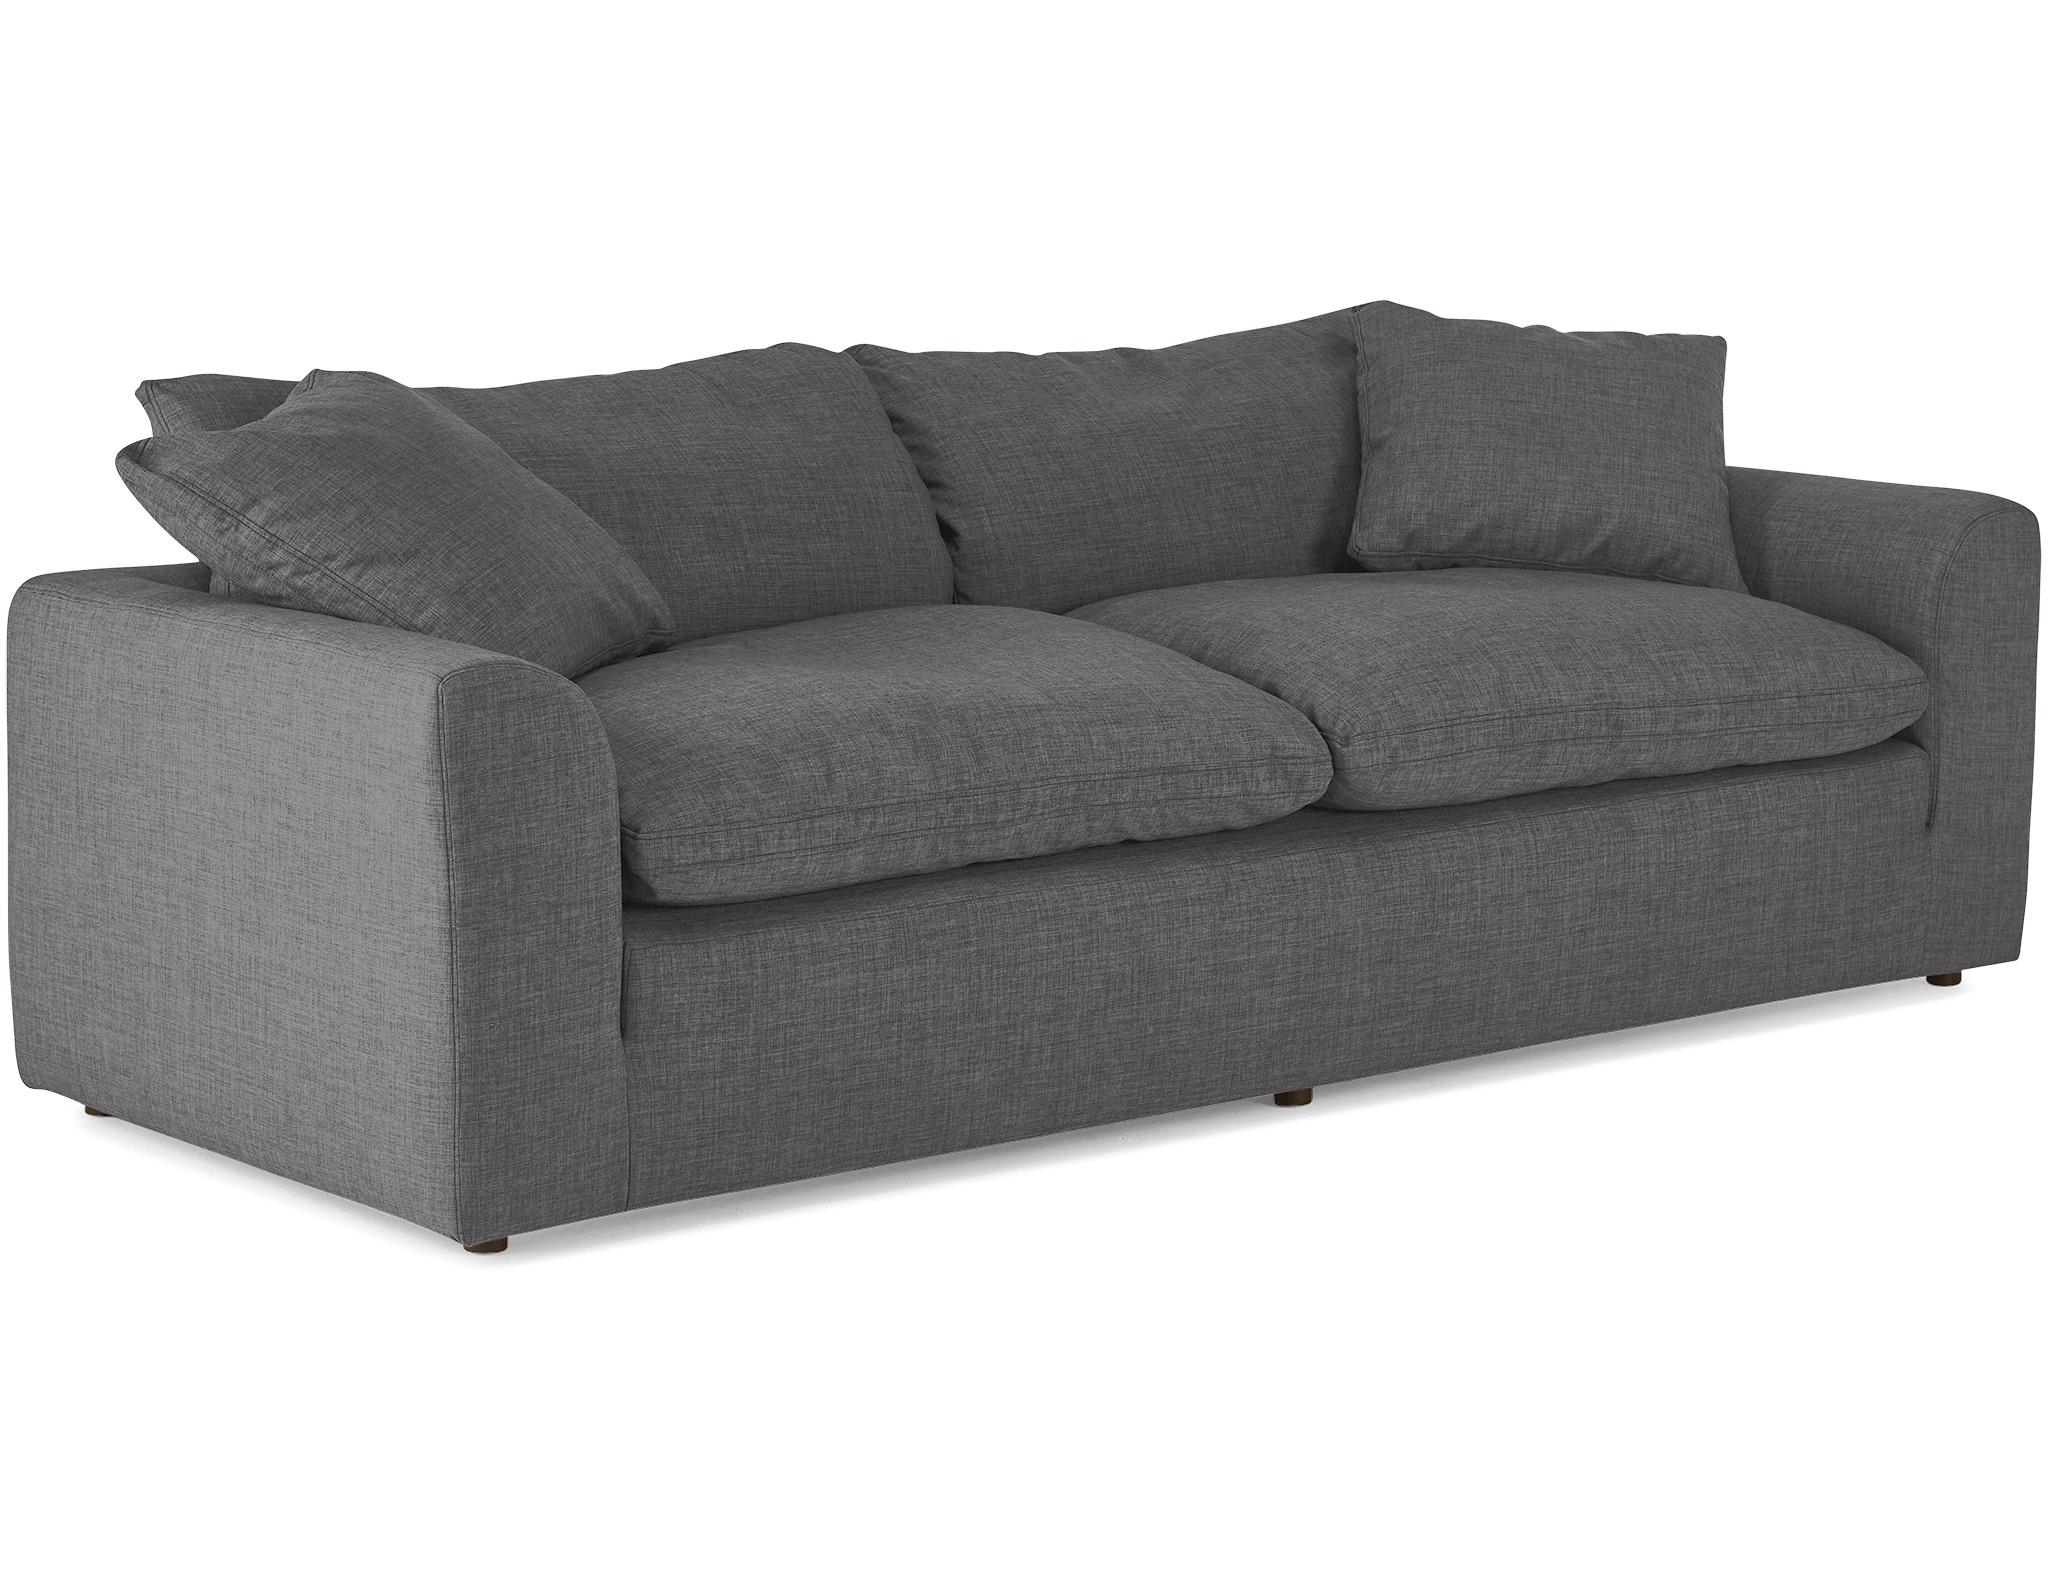 Gray Bryant Mid Century Modern Sofa - Royale Ash - Image 1